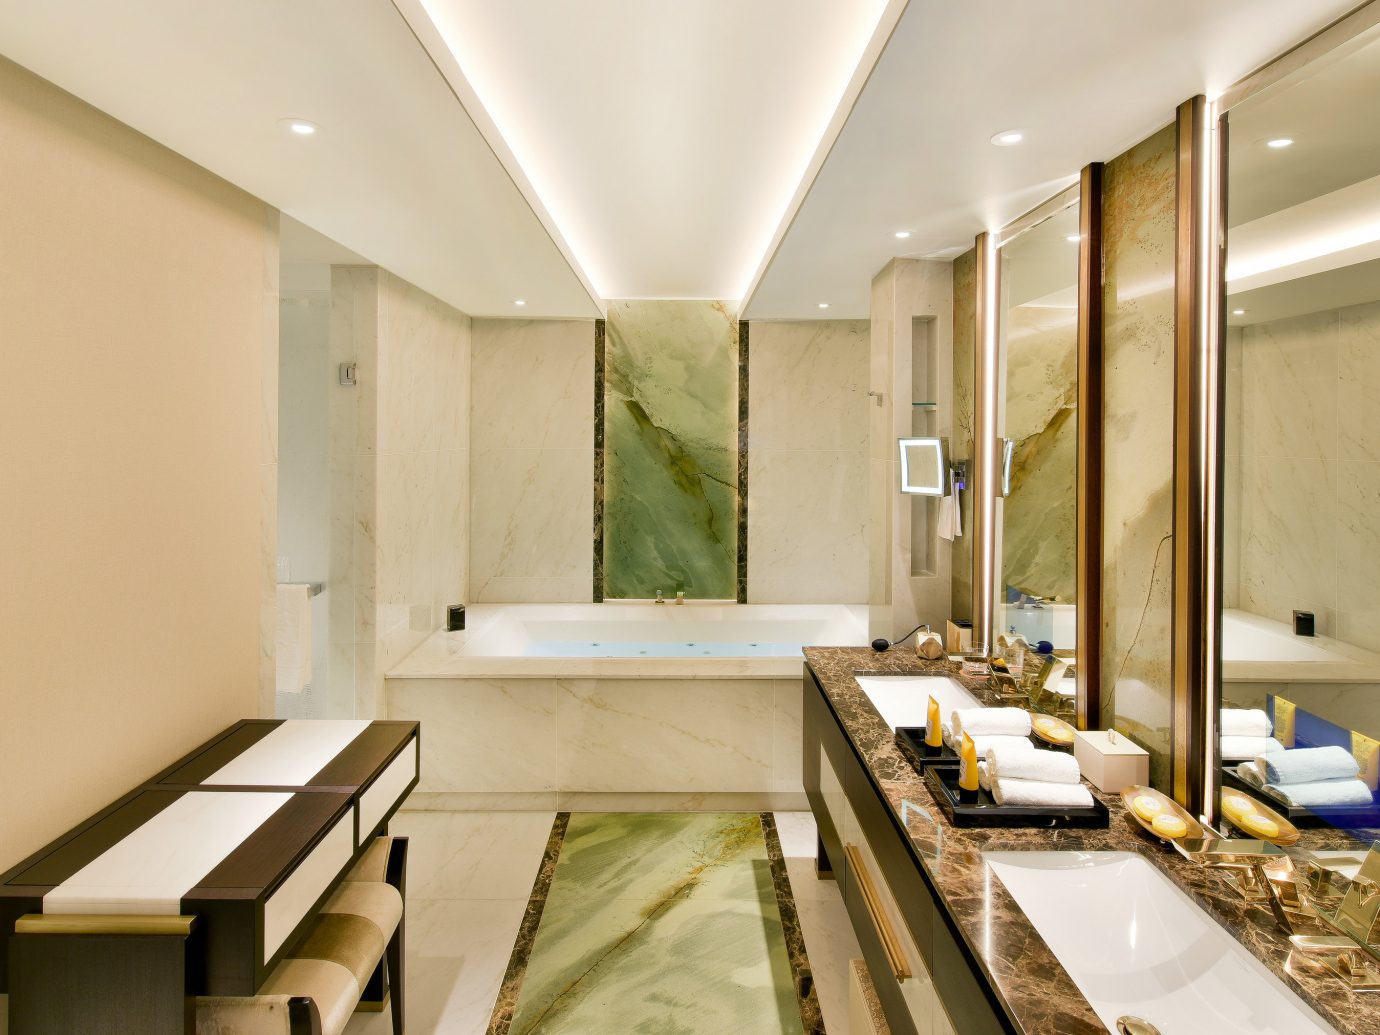 Hotels Luxury Travel indoor wall bathroom ceiling interior design counter sink Lobby interior designer daylighting